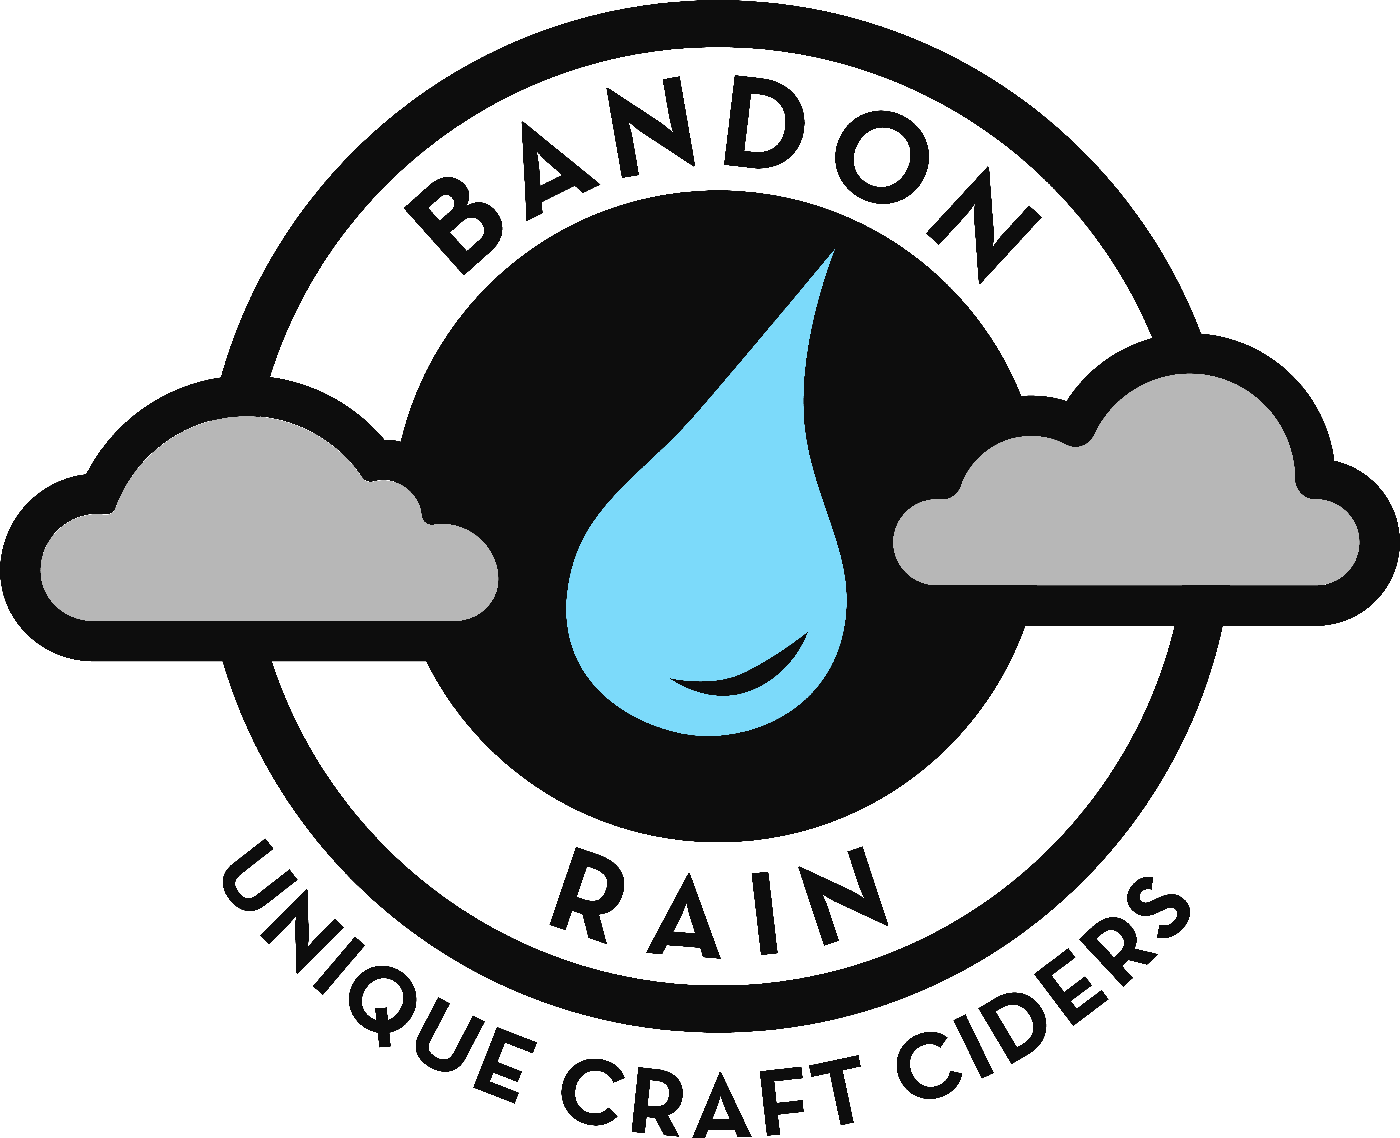 Image result for bandon rain cider company logo